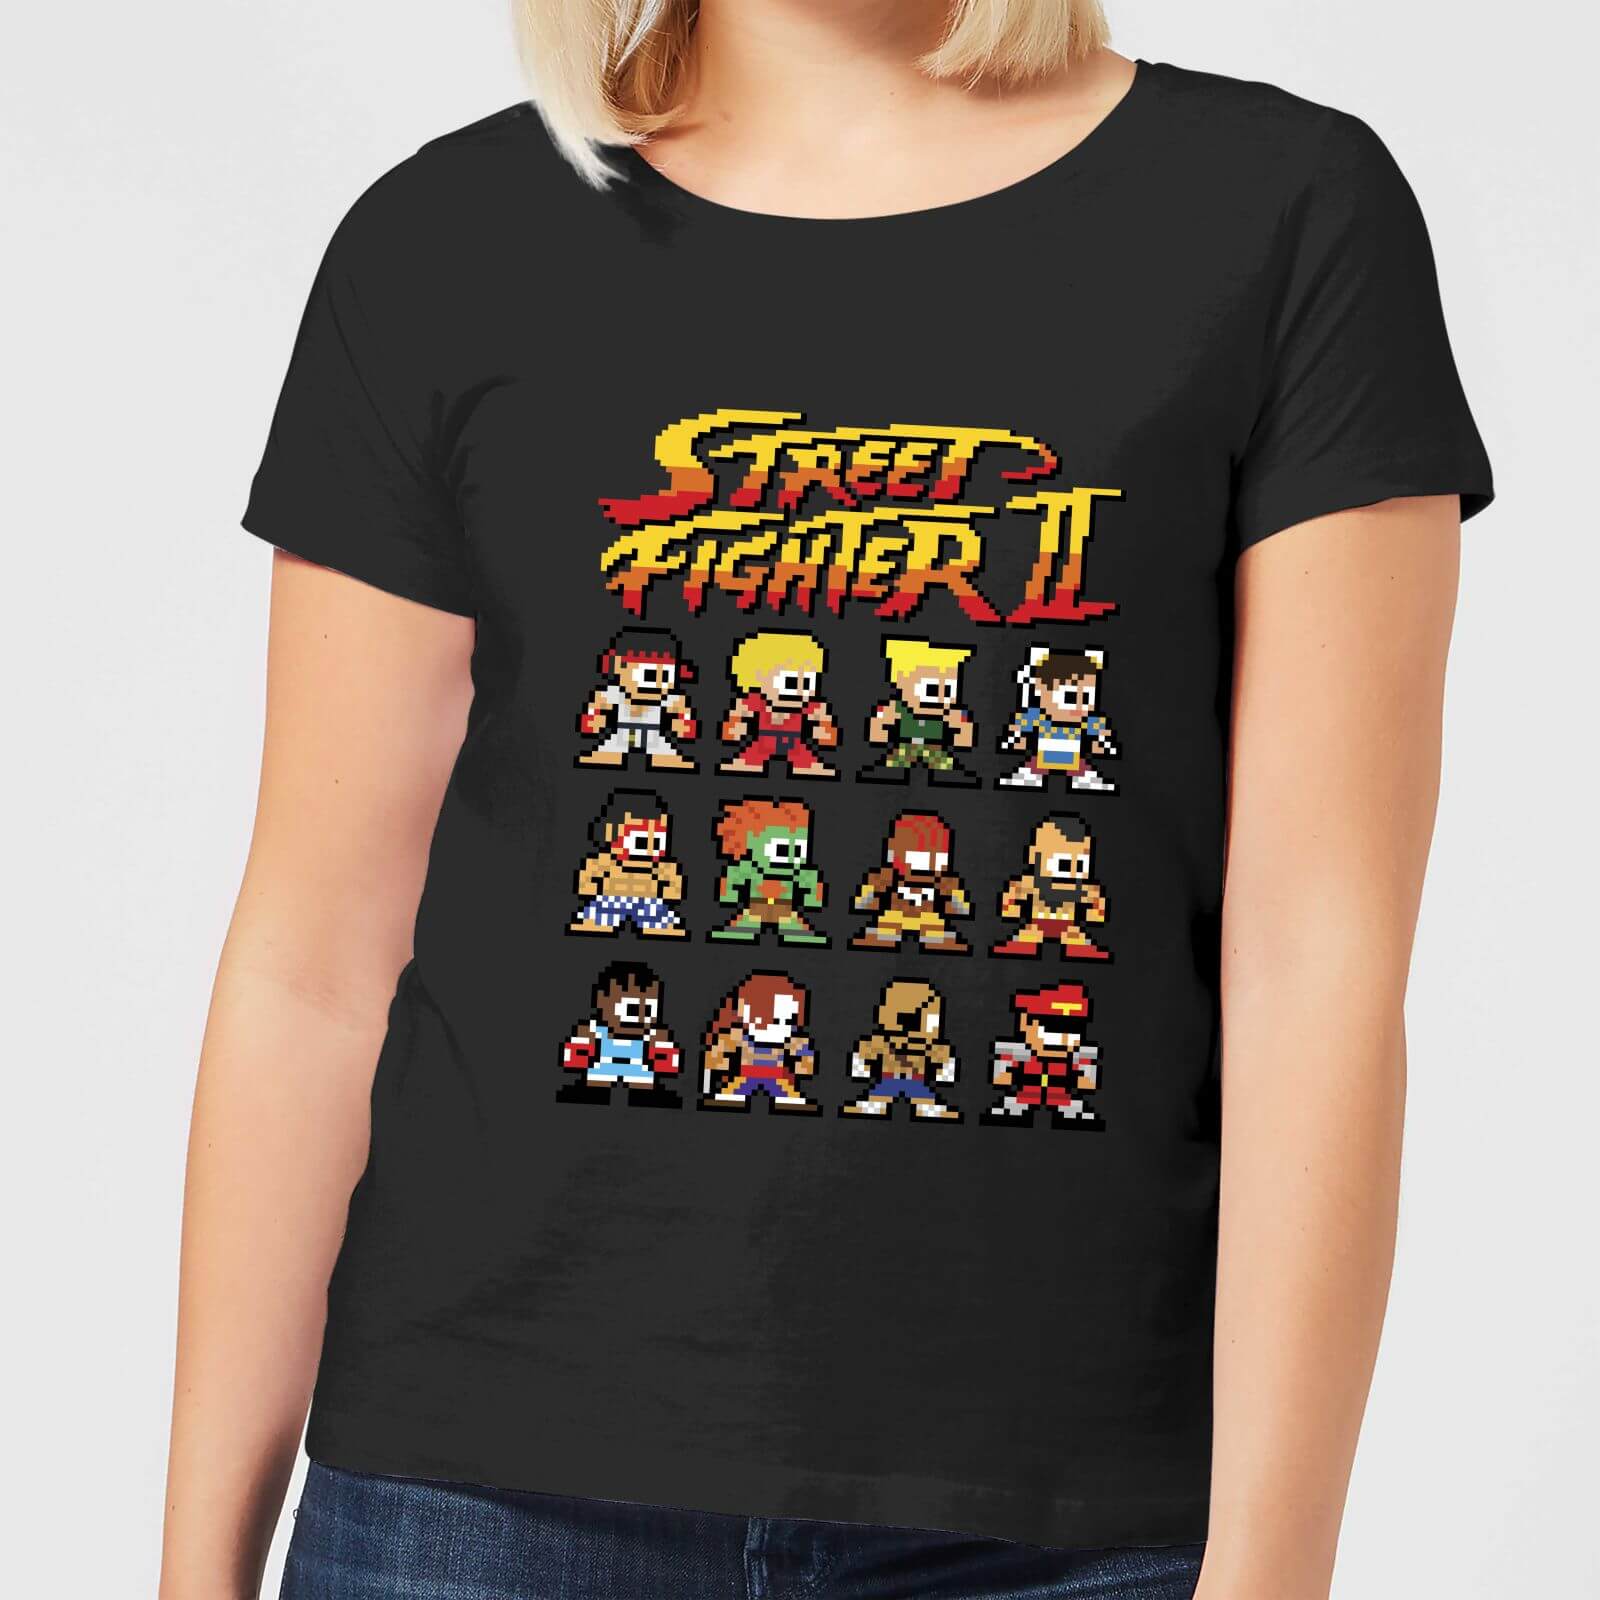 Street Fighter 2 Pixel Characters Women's T-Shirt - Black - 4XL - Black